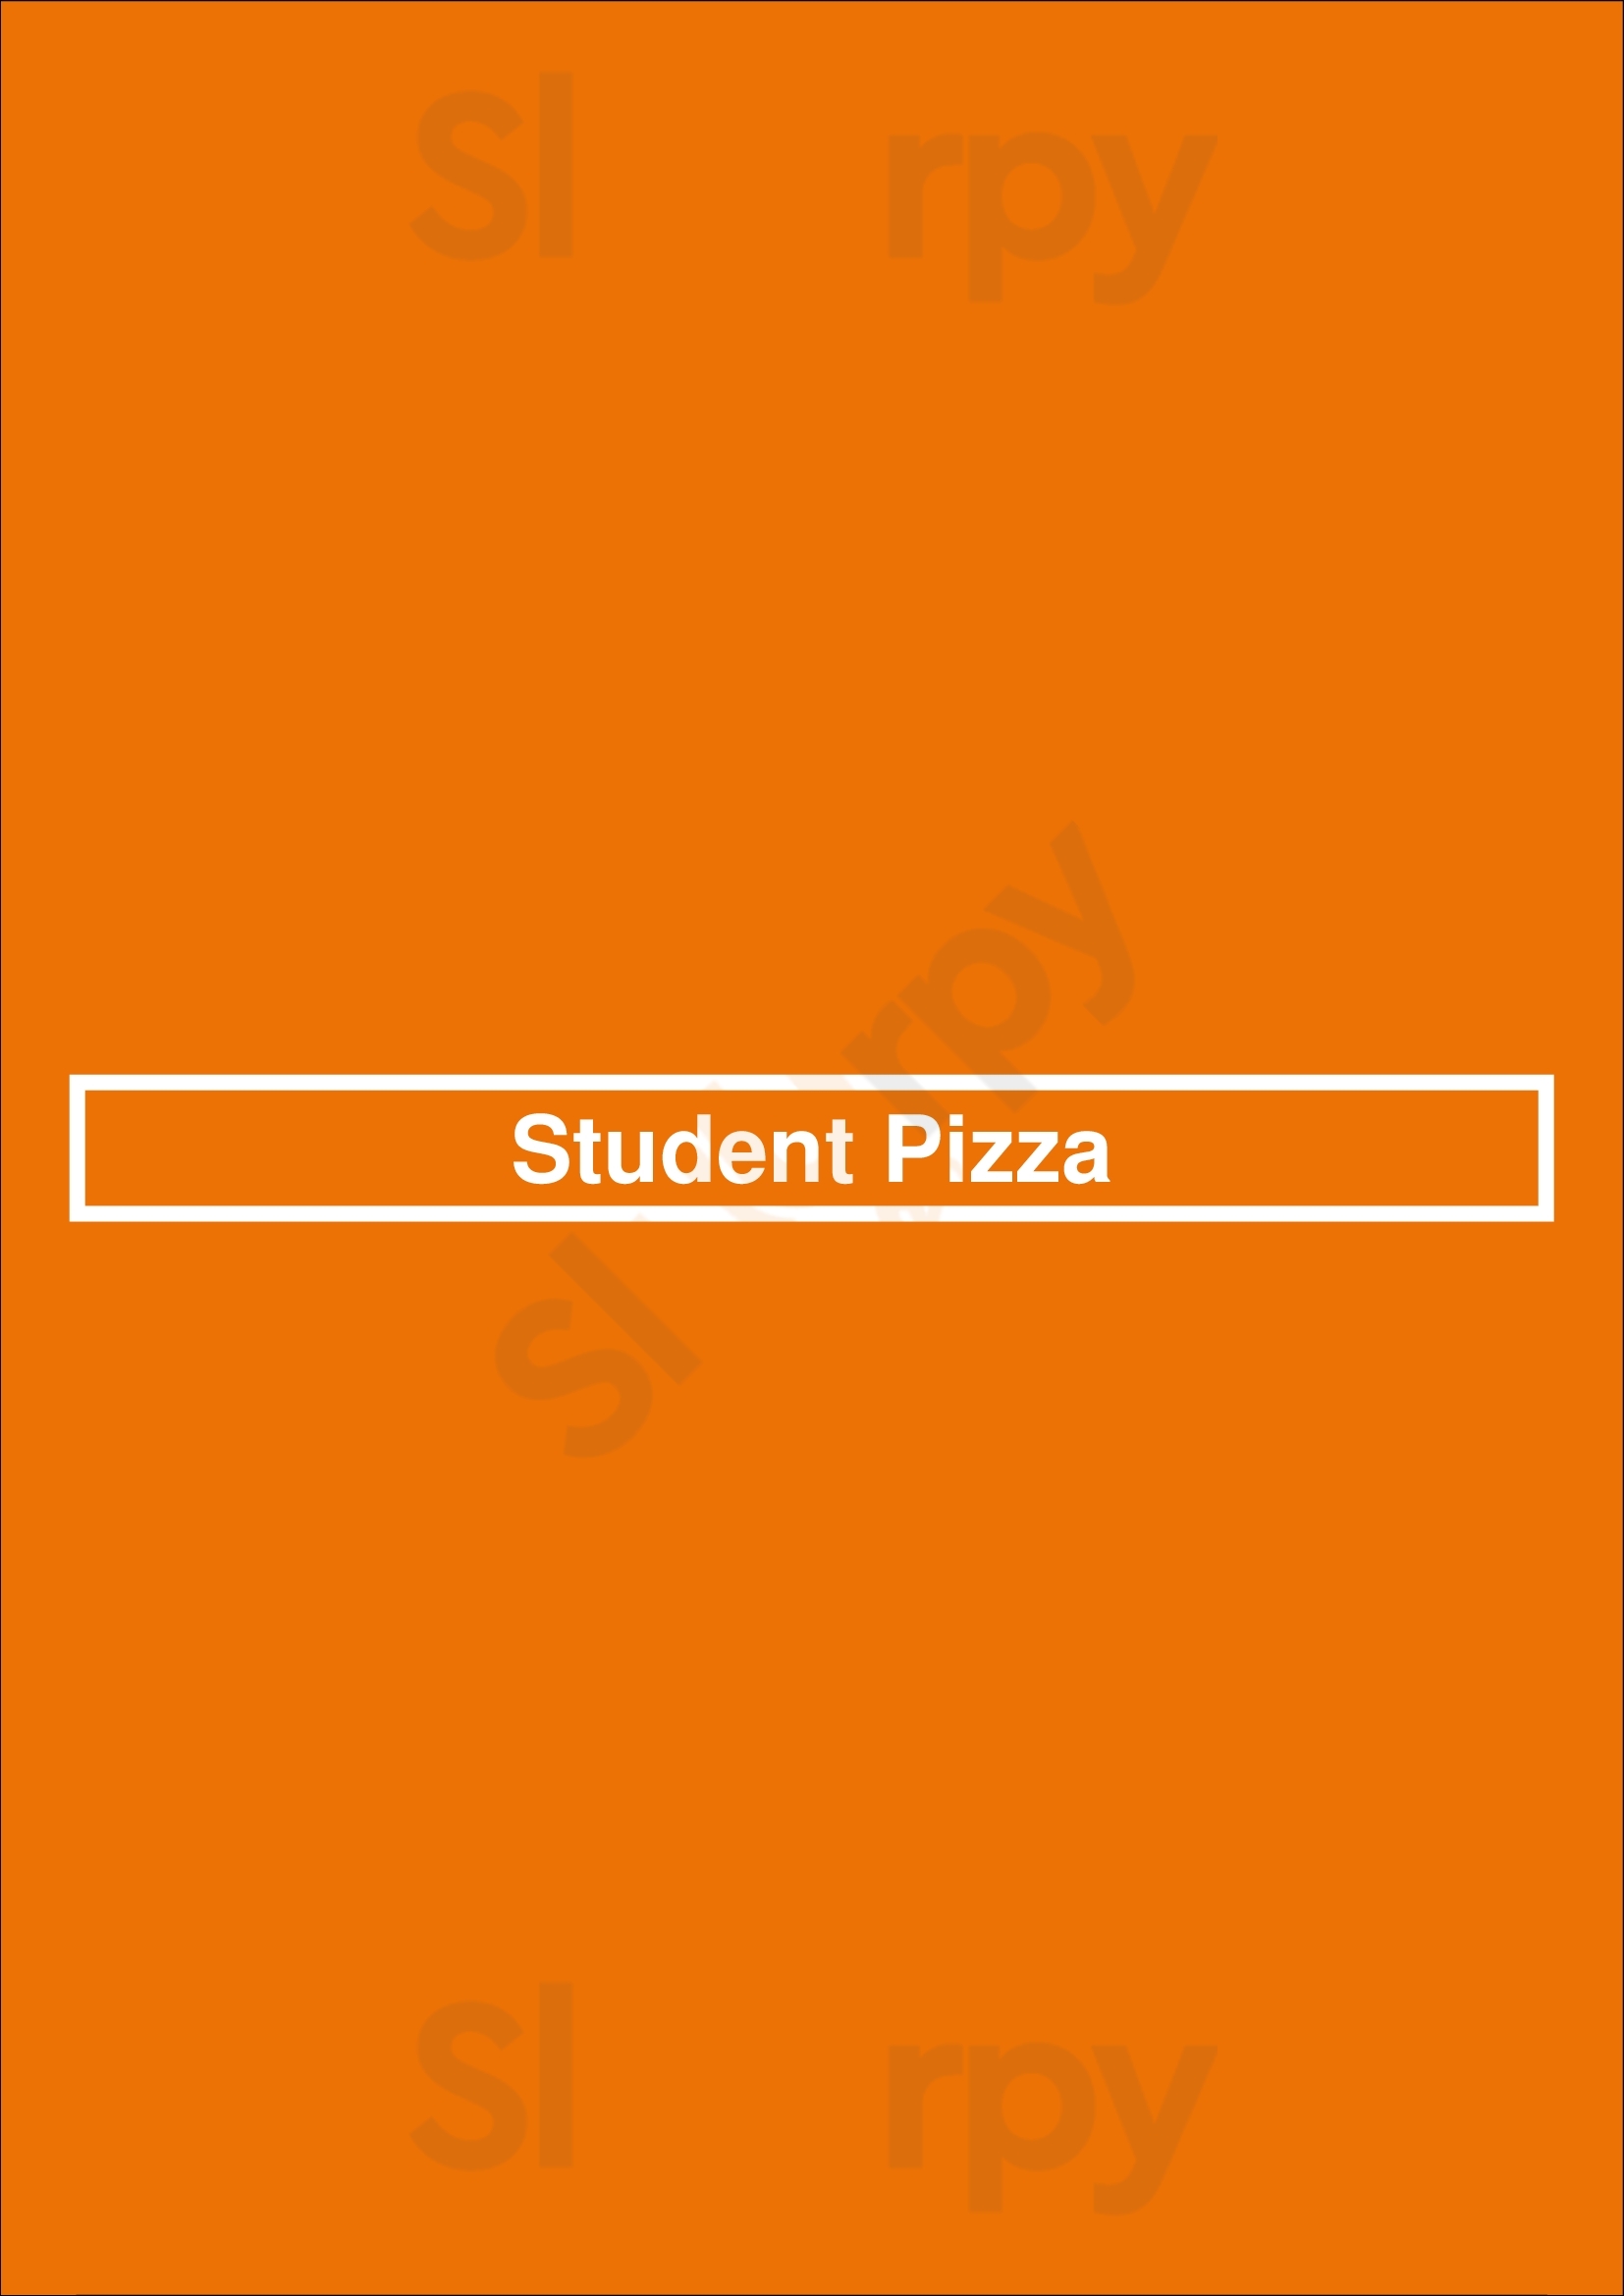 Student Pizza Chester Menu - 1